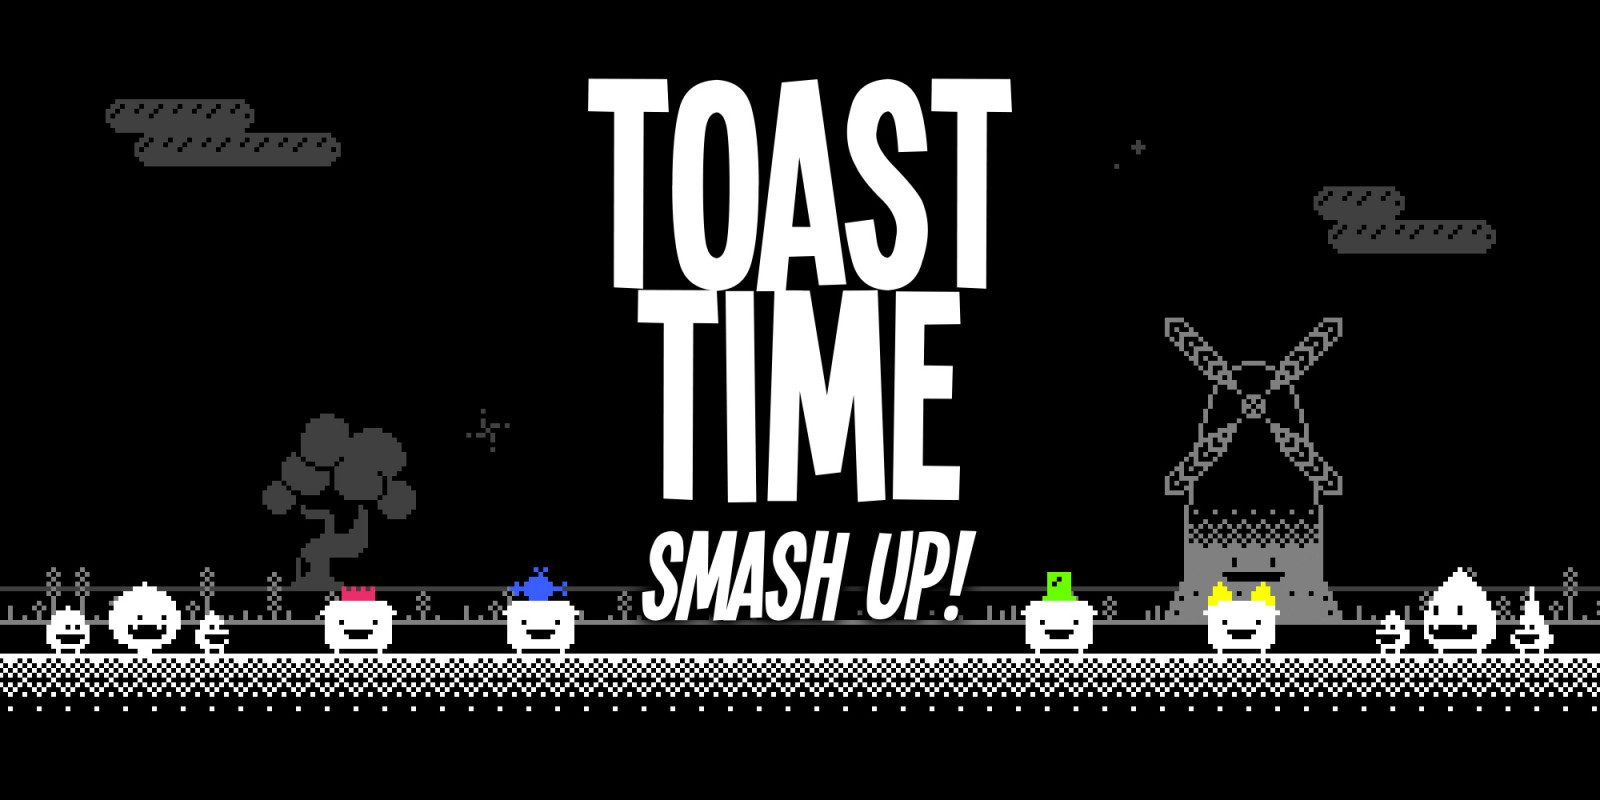 Toast Time: Smash Up!